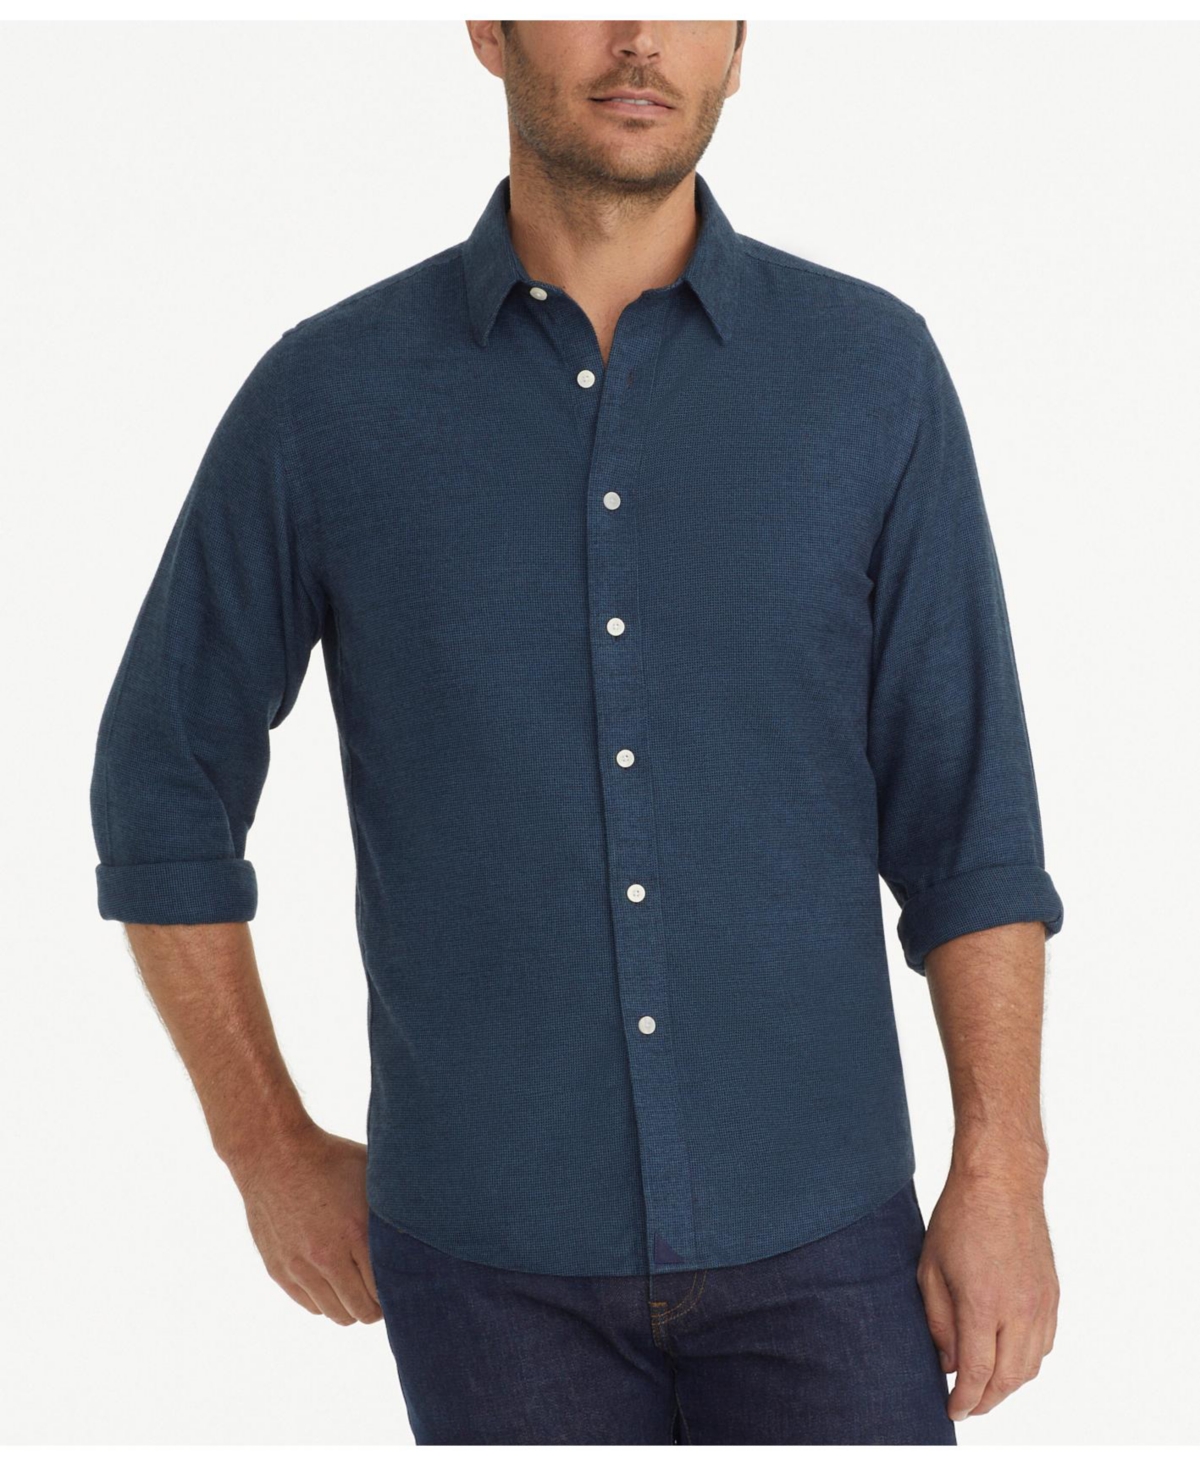 Men's Regular Fit Wrinkle-Free Veneto Button Up Shirt - Light green